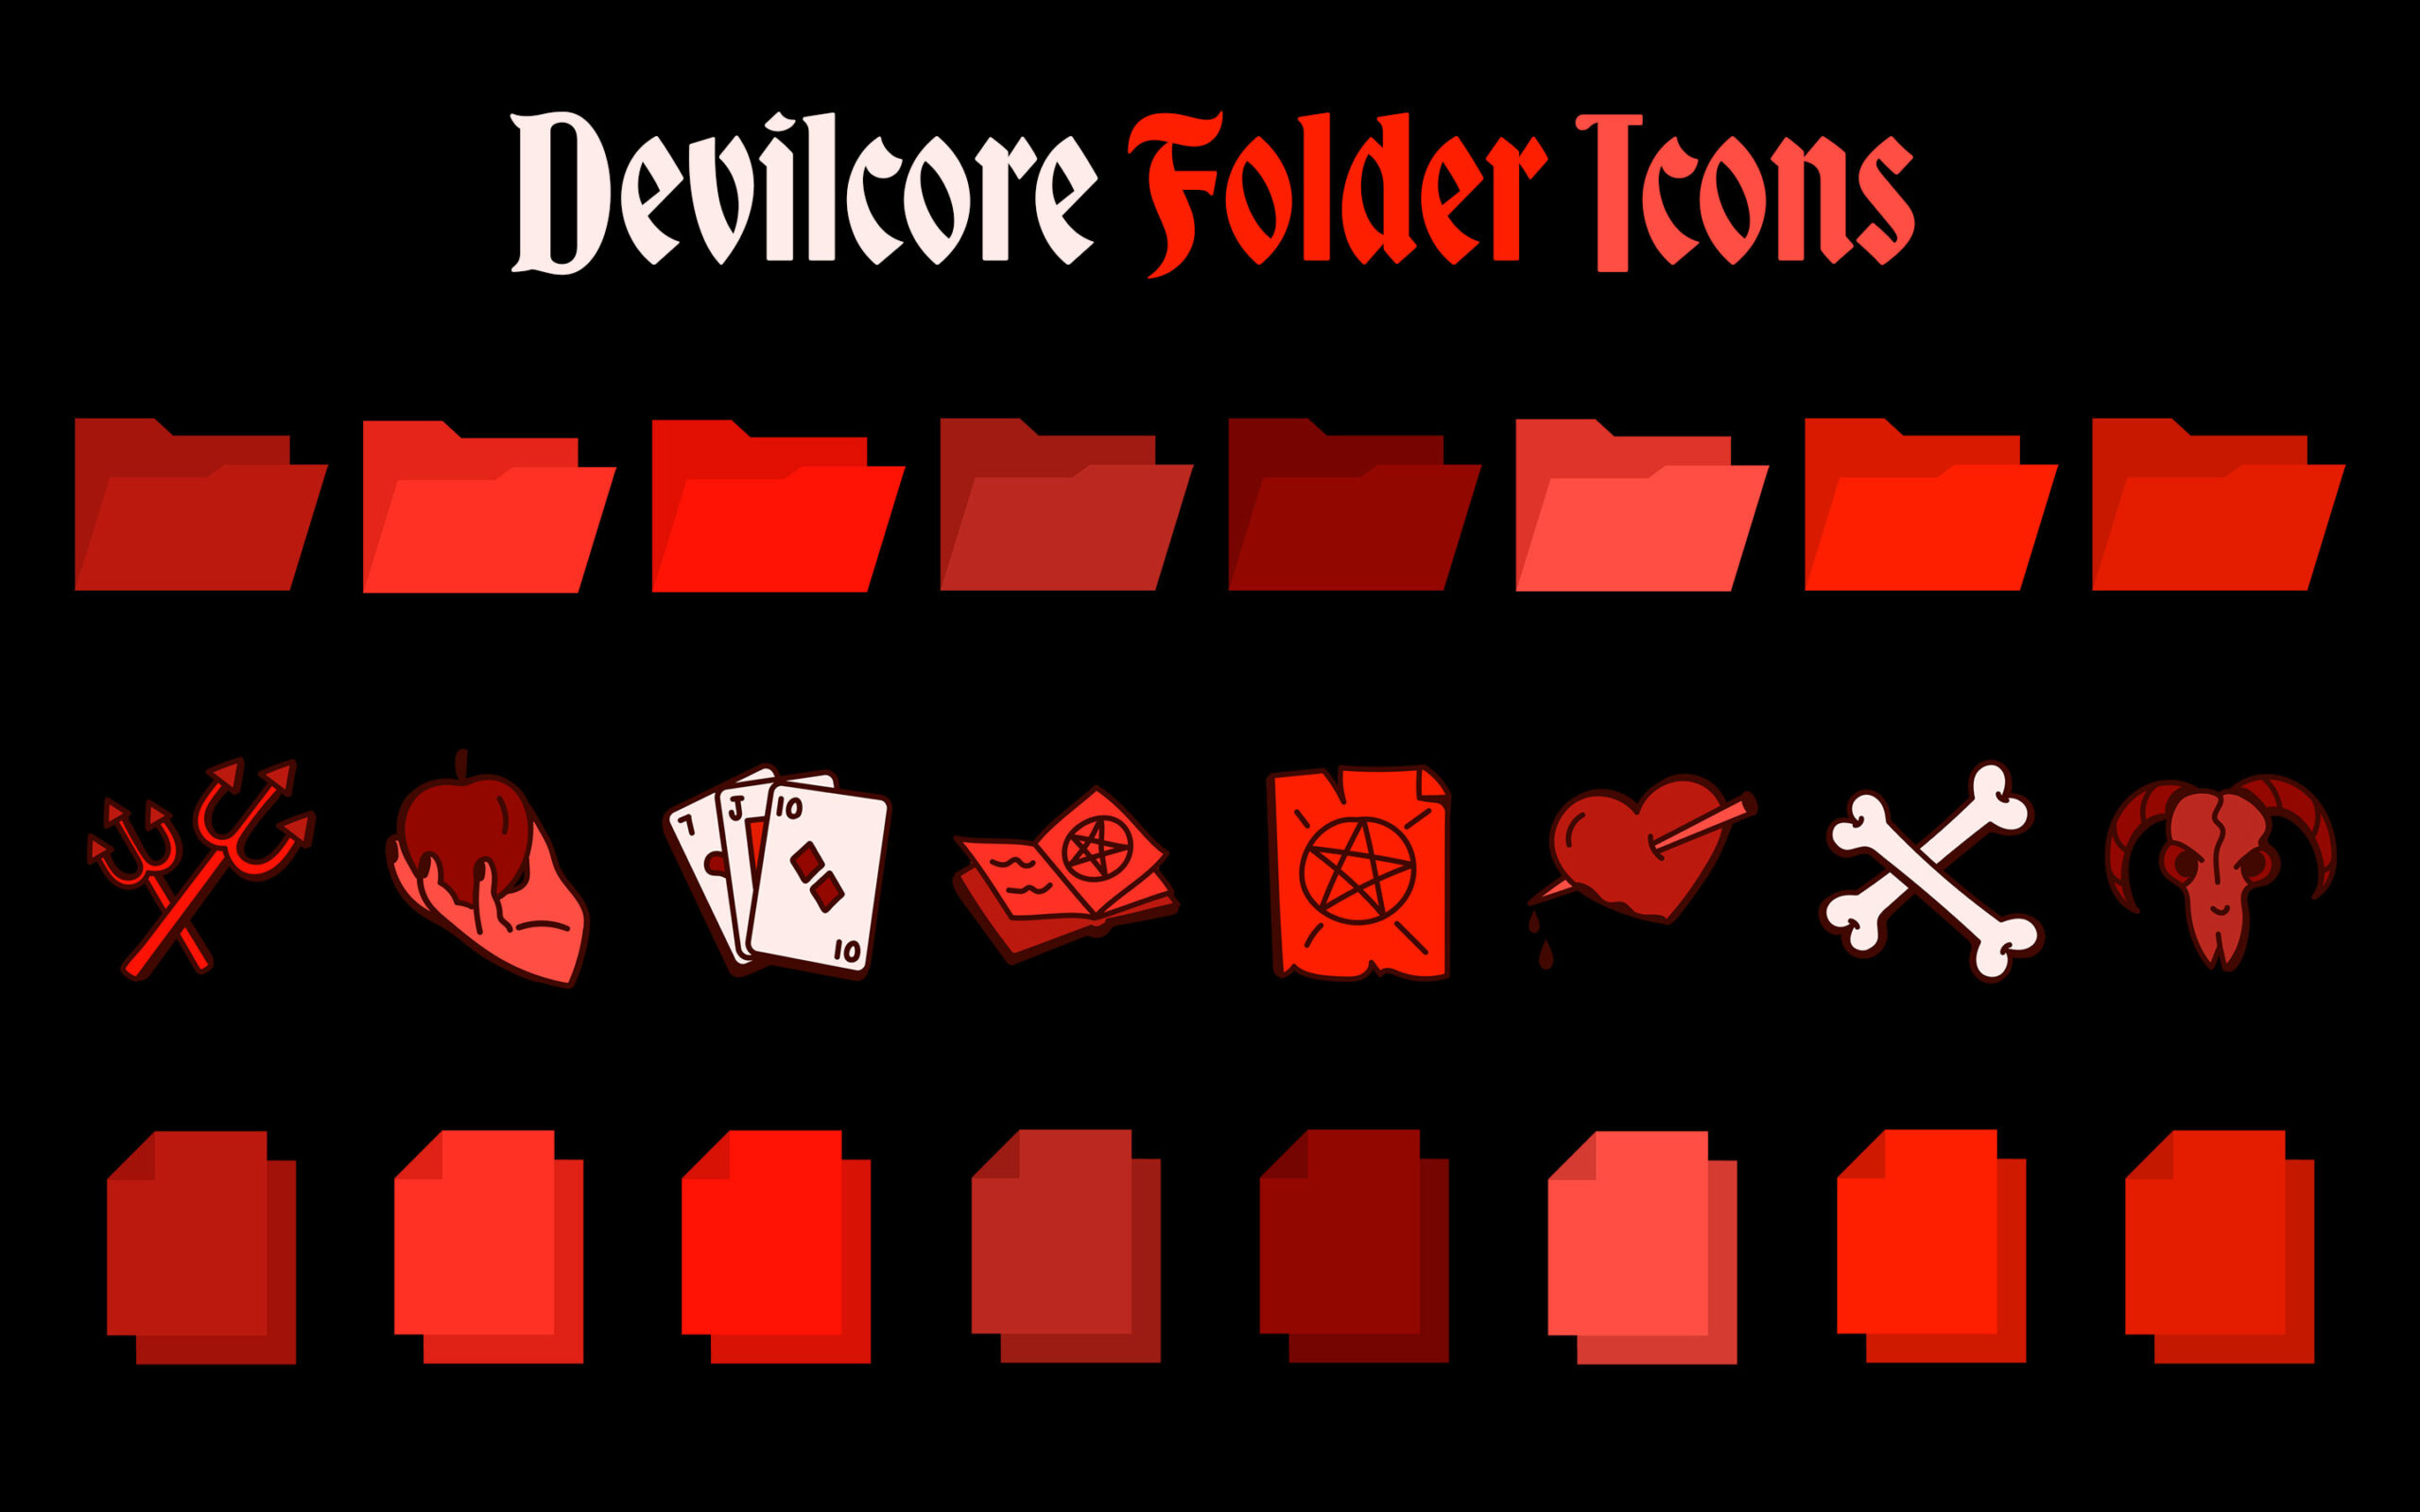 devilcore folder icons 1